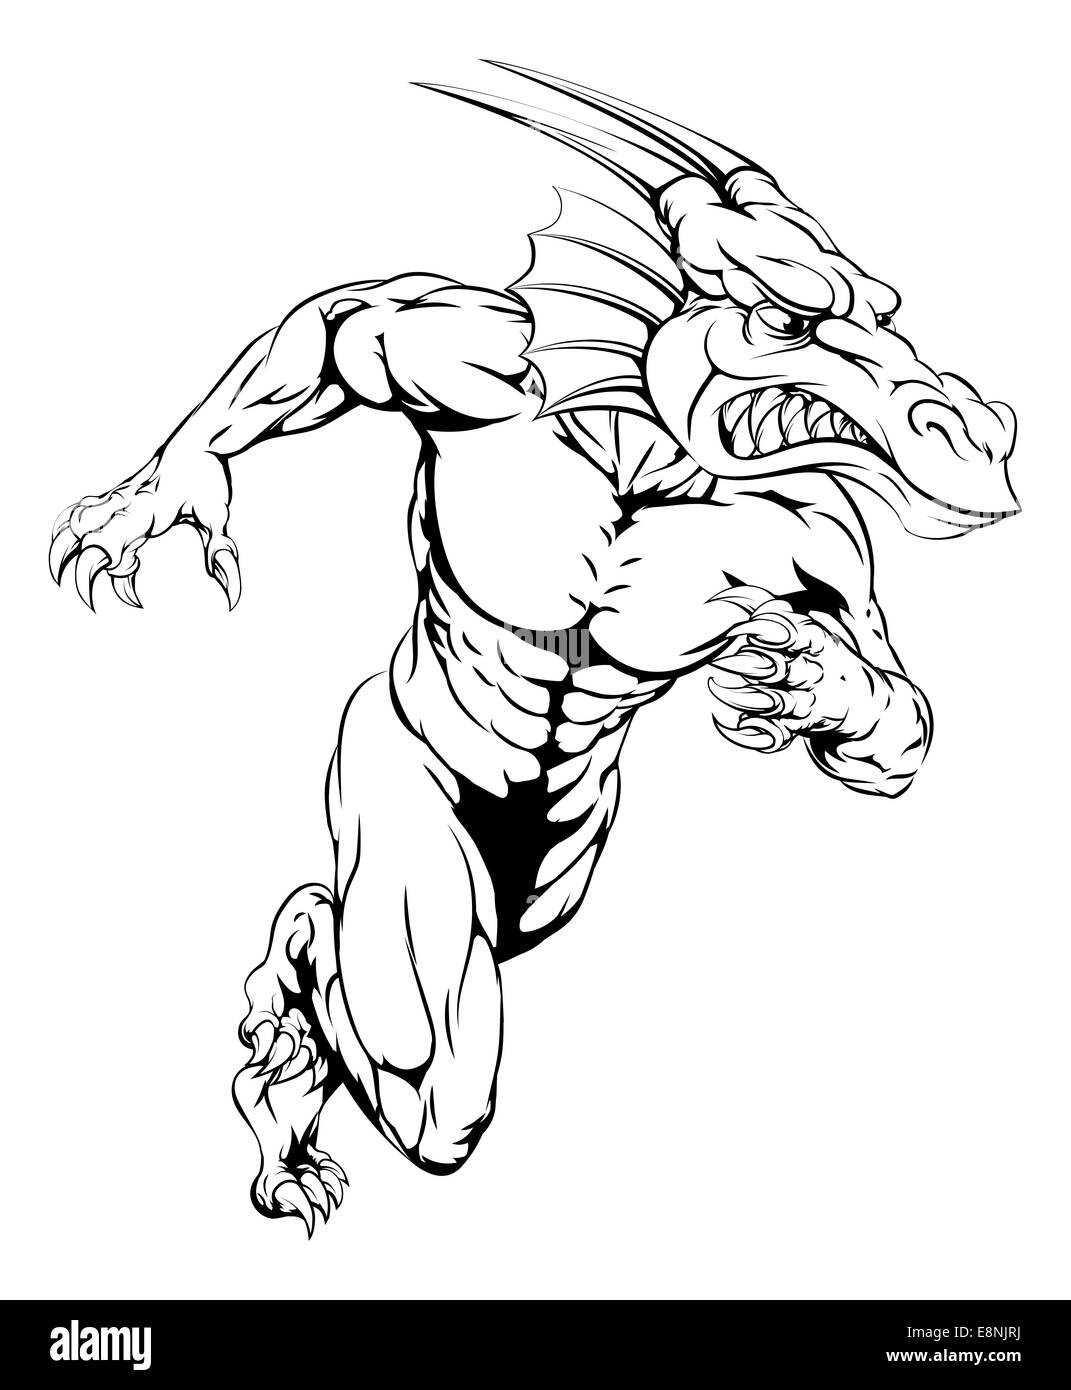 An aggressive muscular dragon sports mascot character charging Stock Photo